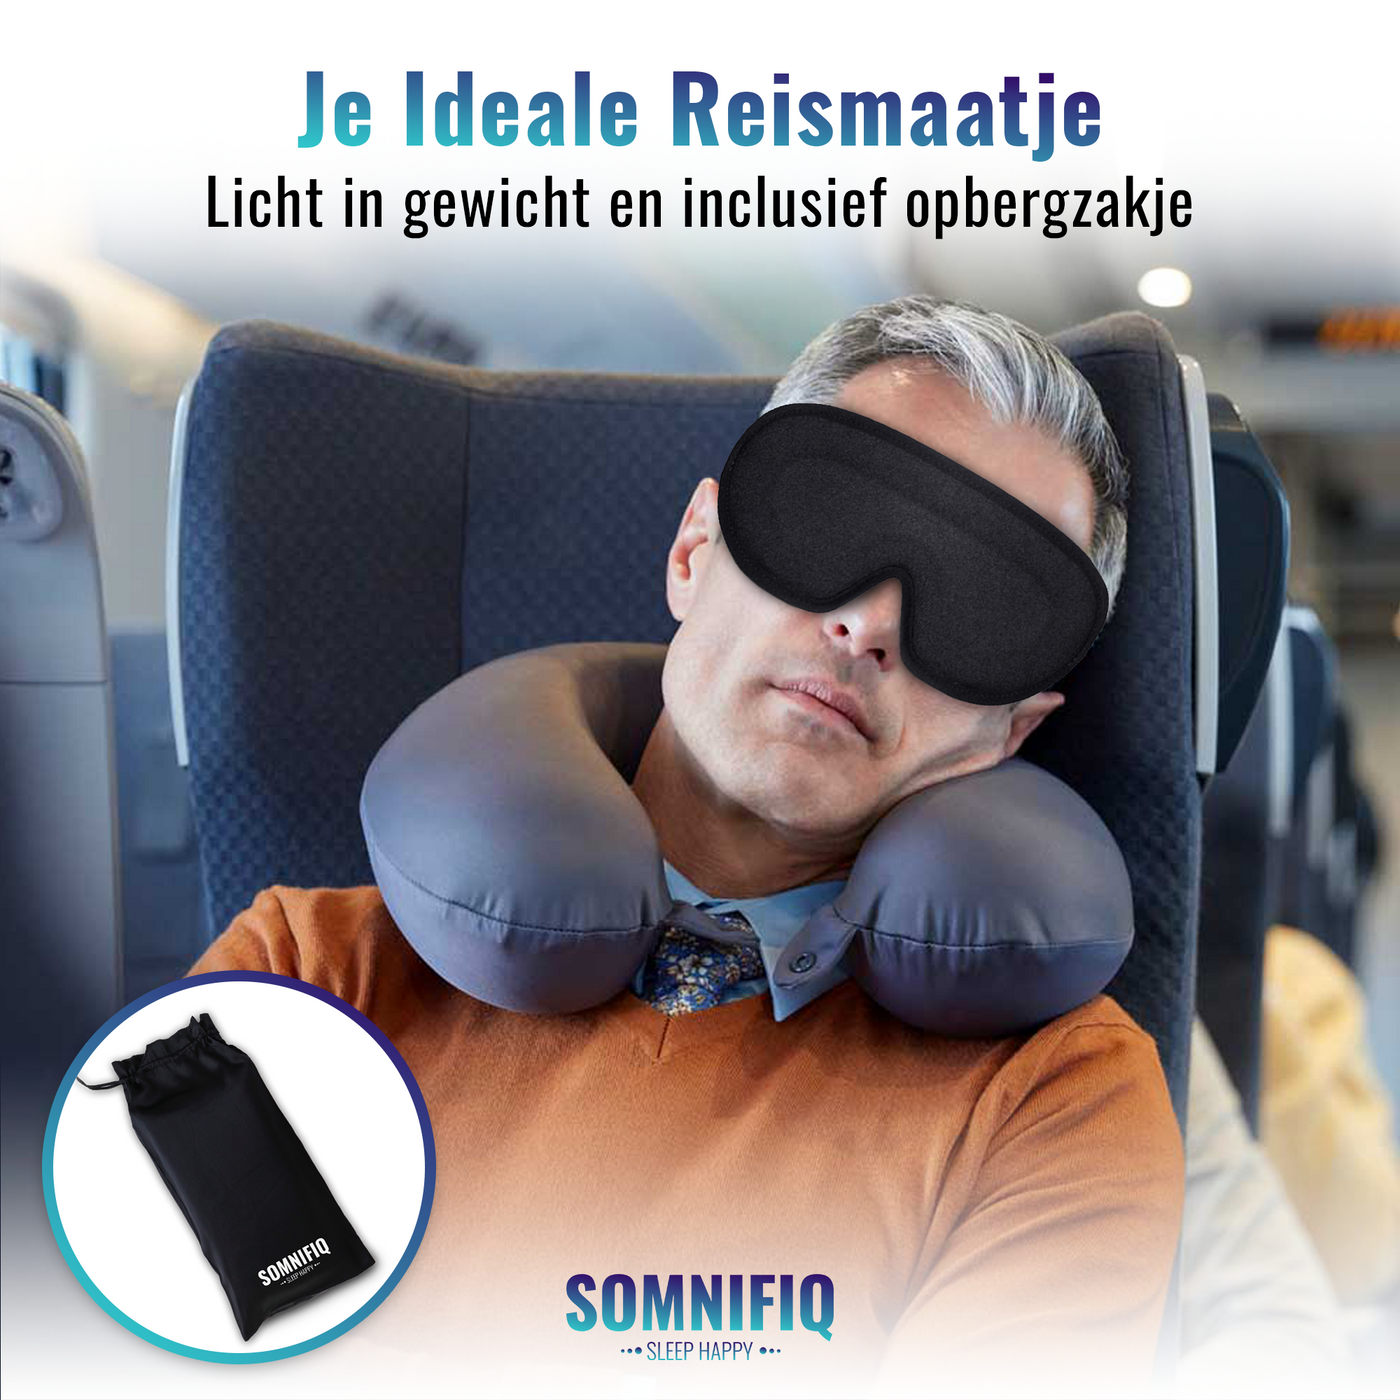 Somnifiq 3D Slaapmasker